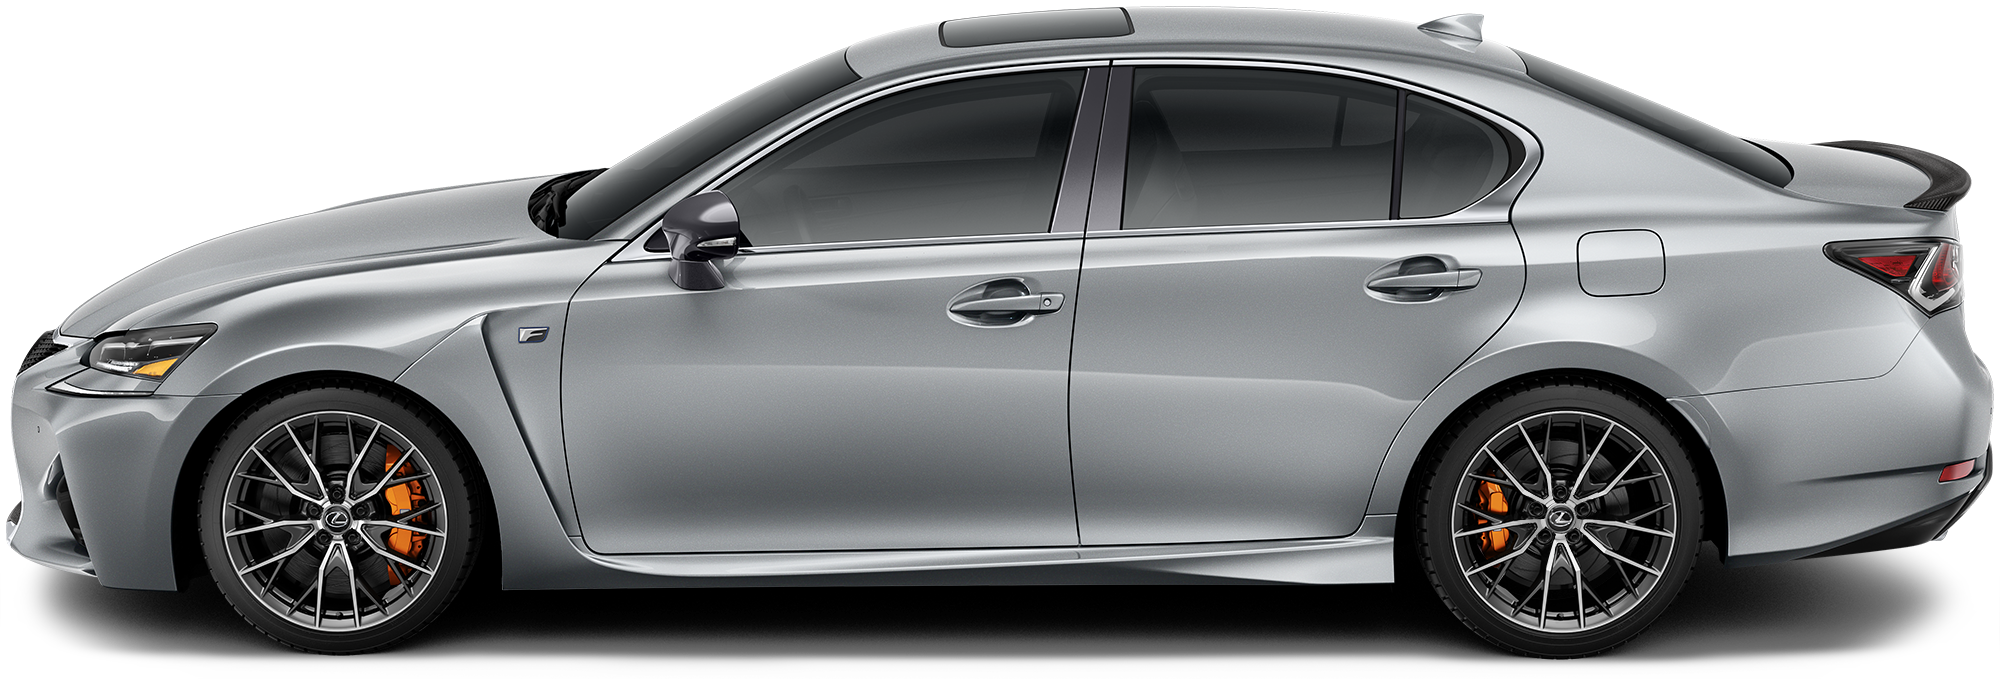 2020 Lexus GS F Sedan 